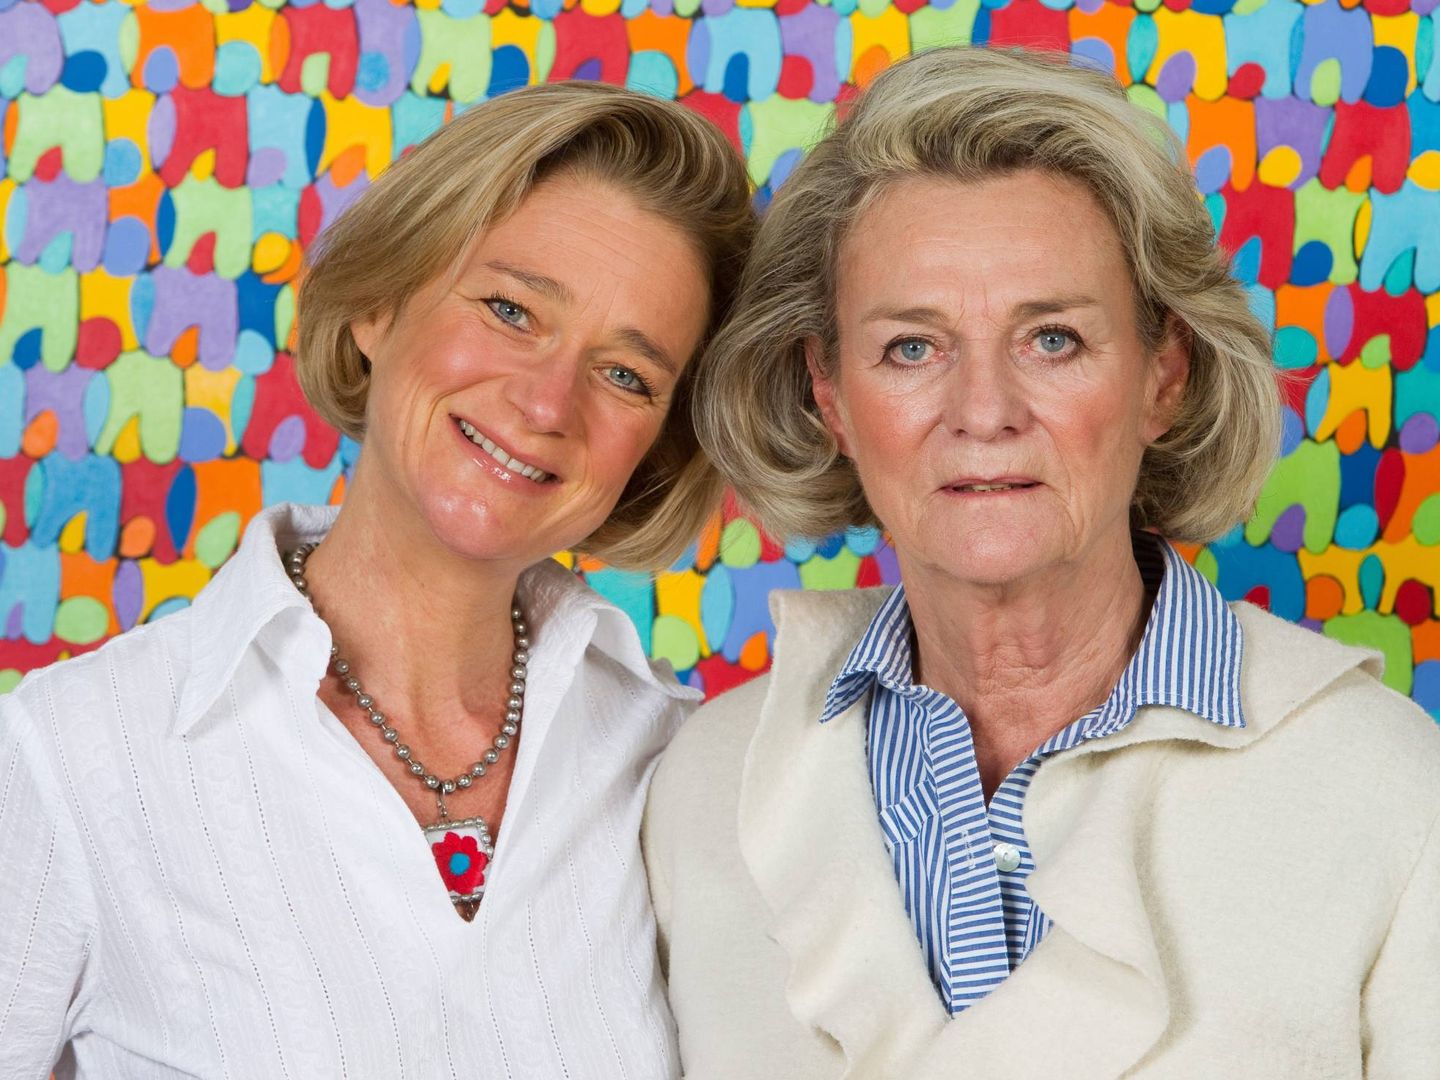 Delphine Boël, junto a su madre, Sybille de Selys Longchamps. (Cordon Press)